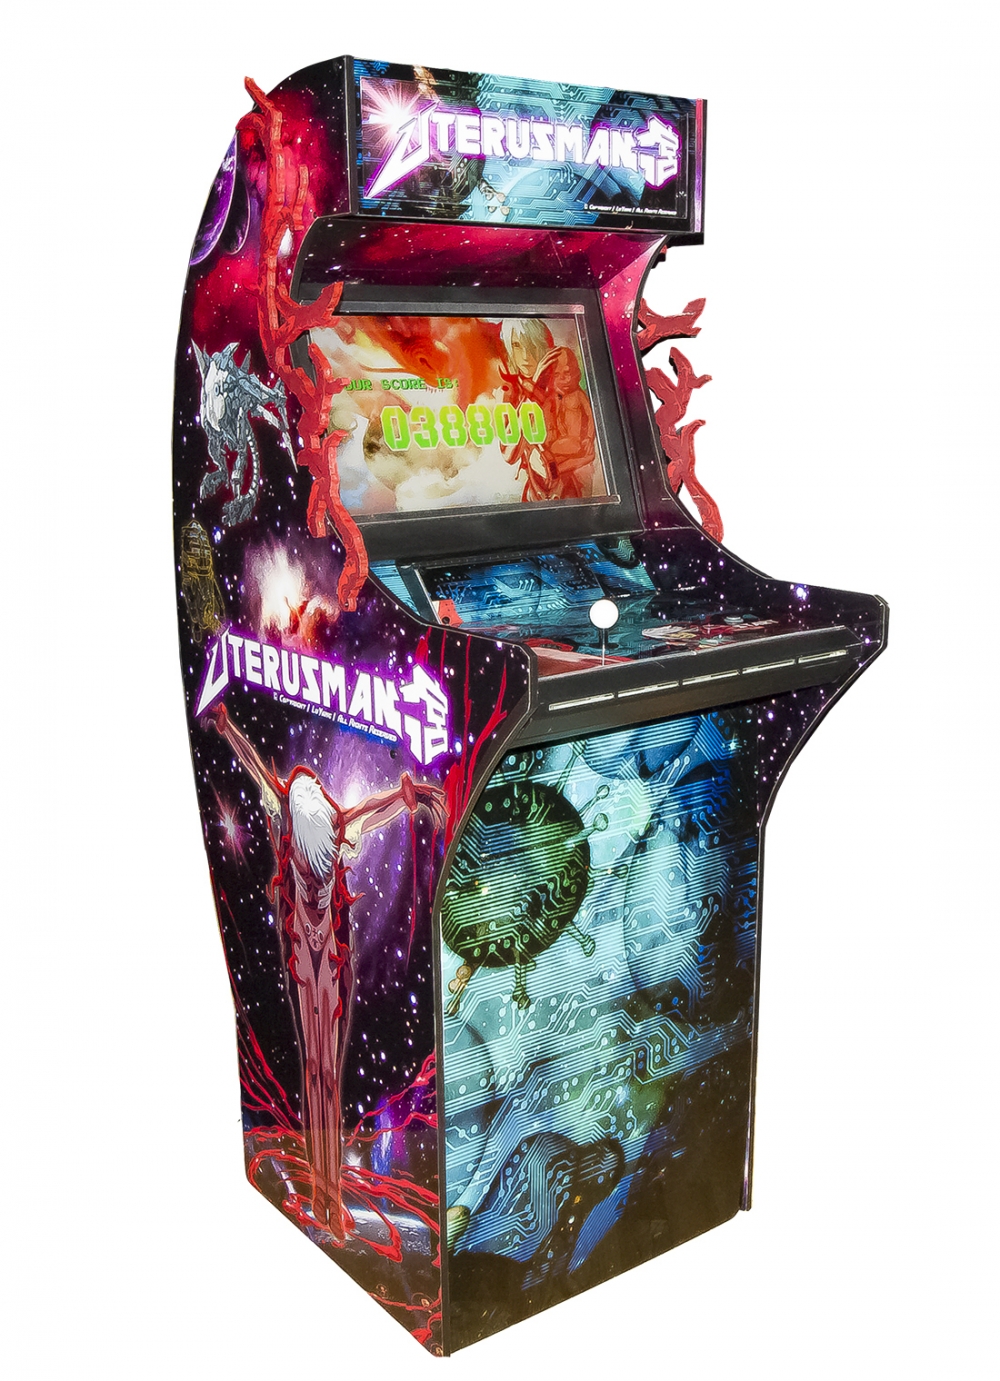 Lu Yang 'Uterus Man' Arcade Machine, 2013 Assembled arcade machine Video game for Fukuoka Asian Art Museum at Fukuoka Asian Art Triennale